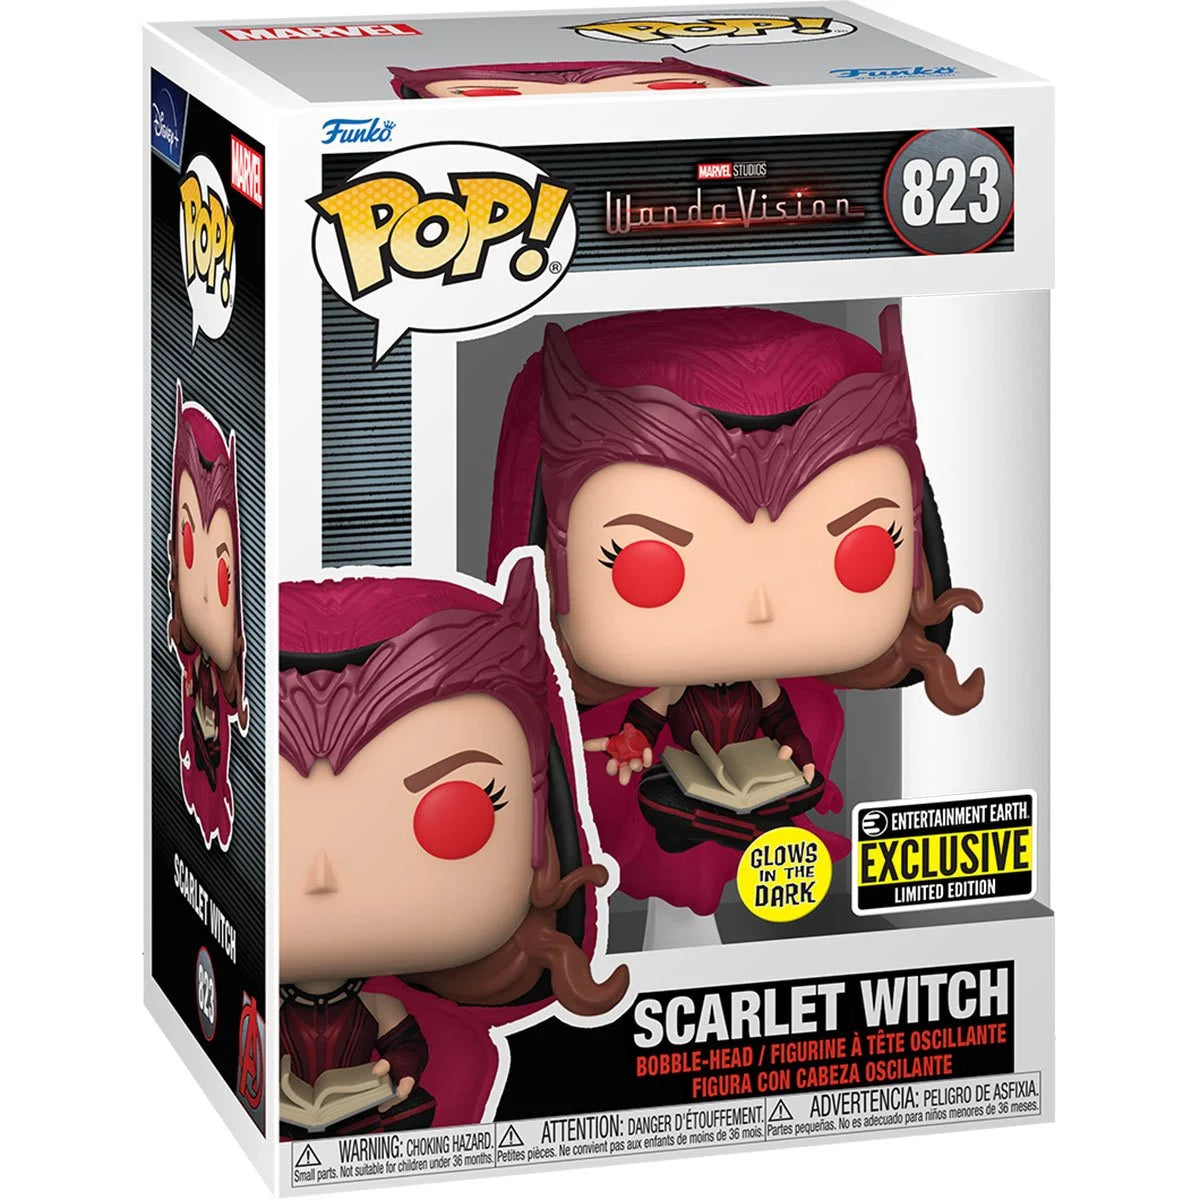 WandaVision Scarlet Witch GITD Pop! Vinyl Figure - EE Excl.